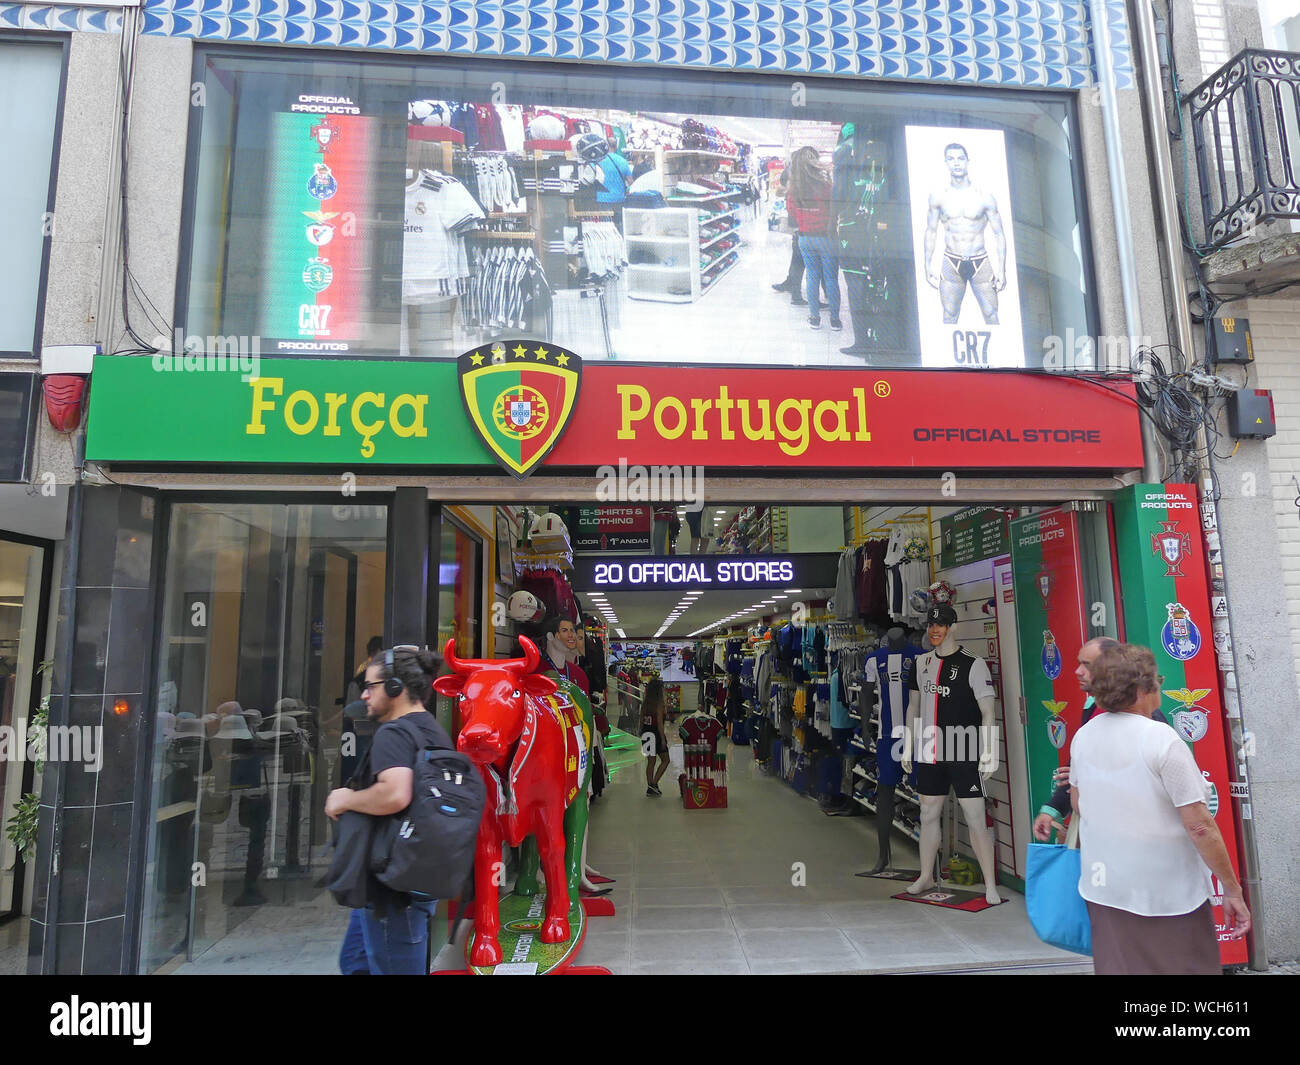 FORÇA PORTUGAL store in Porto,Portugal. A right of centre political party alliance. Photo: Tony Gale Stock Photo